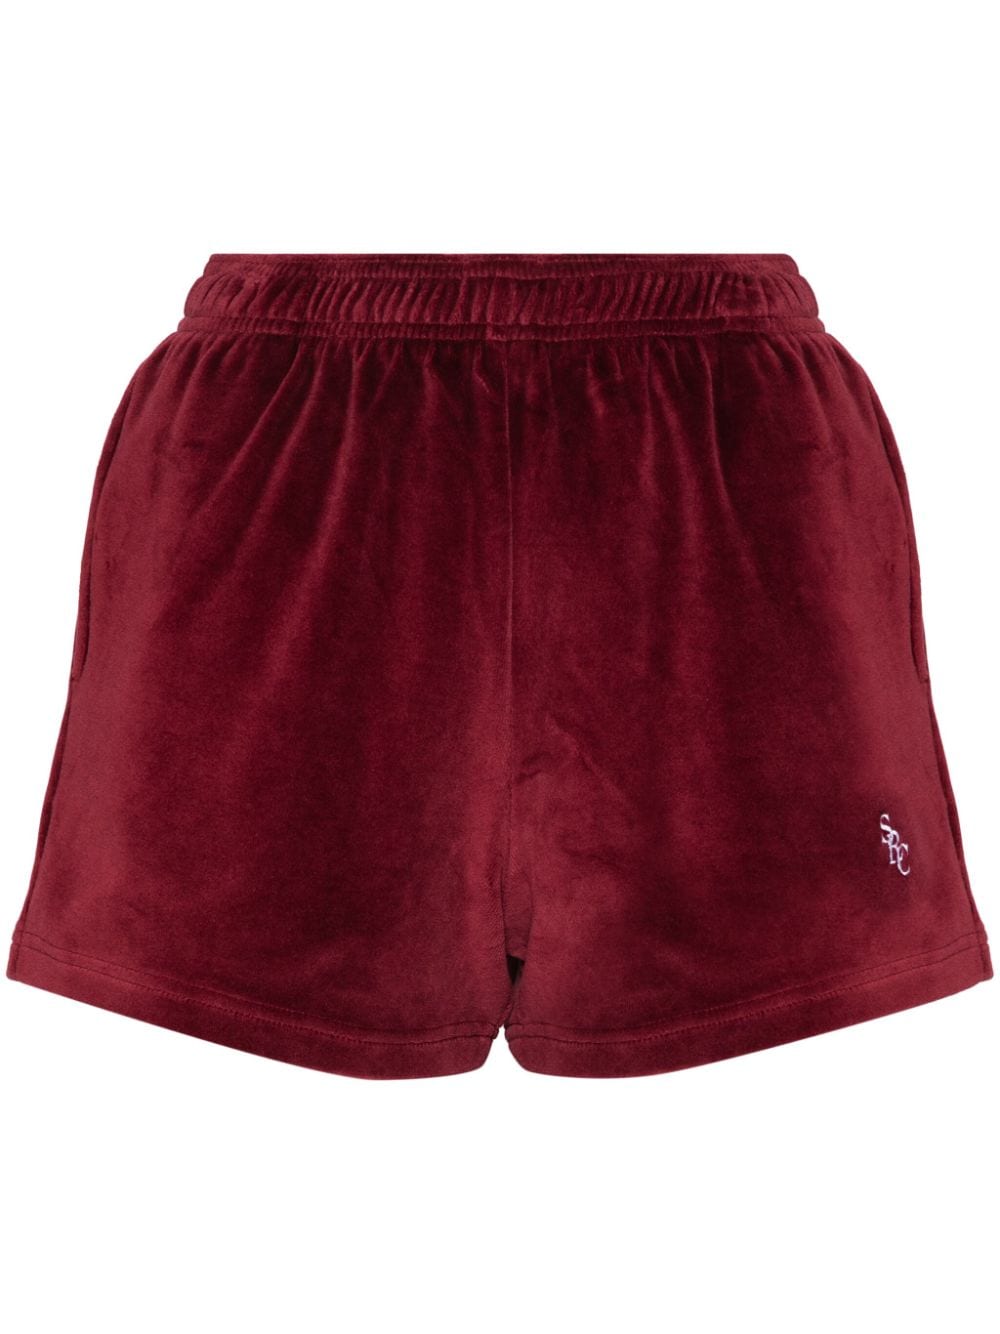 Sporty & Rich SRC velour mini shorts - Red von Sporty & Rich